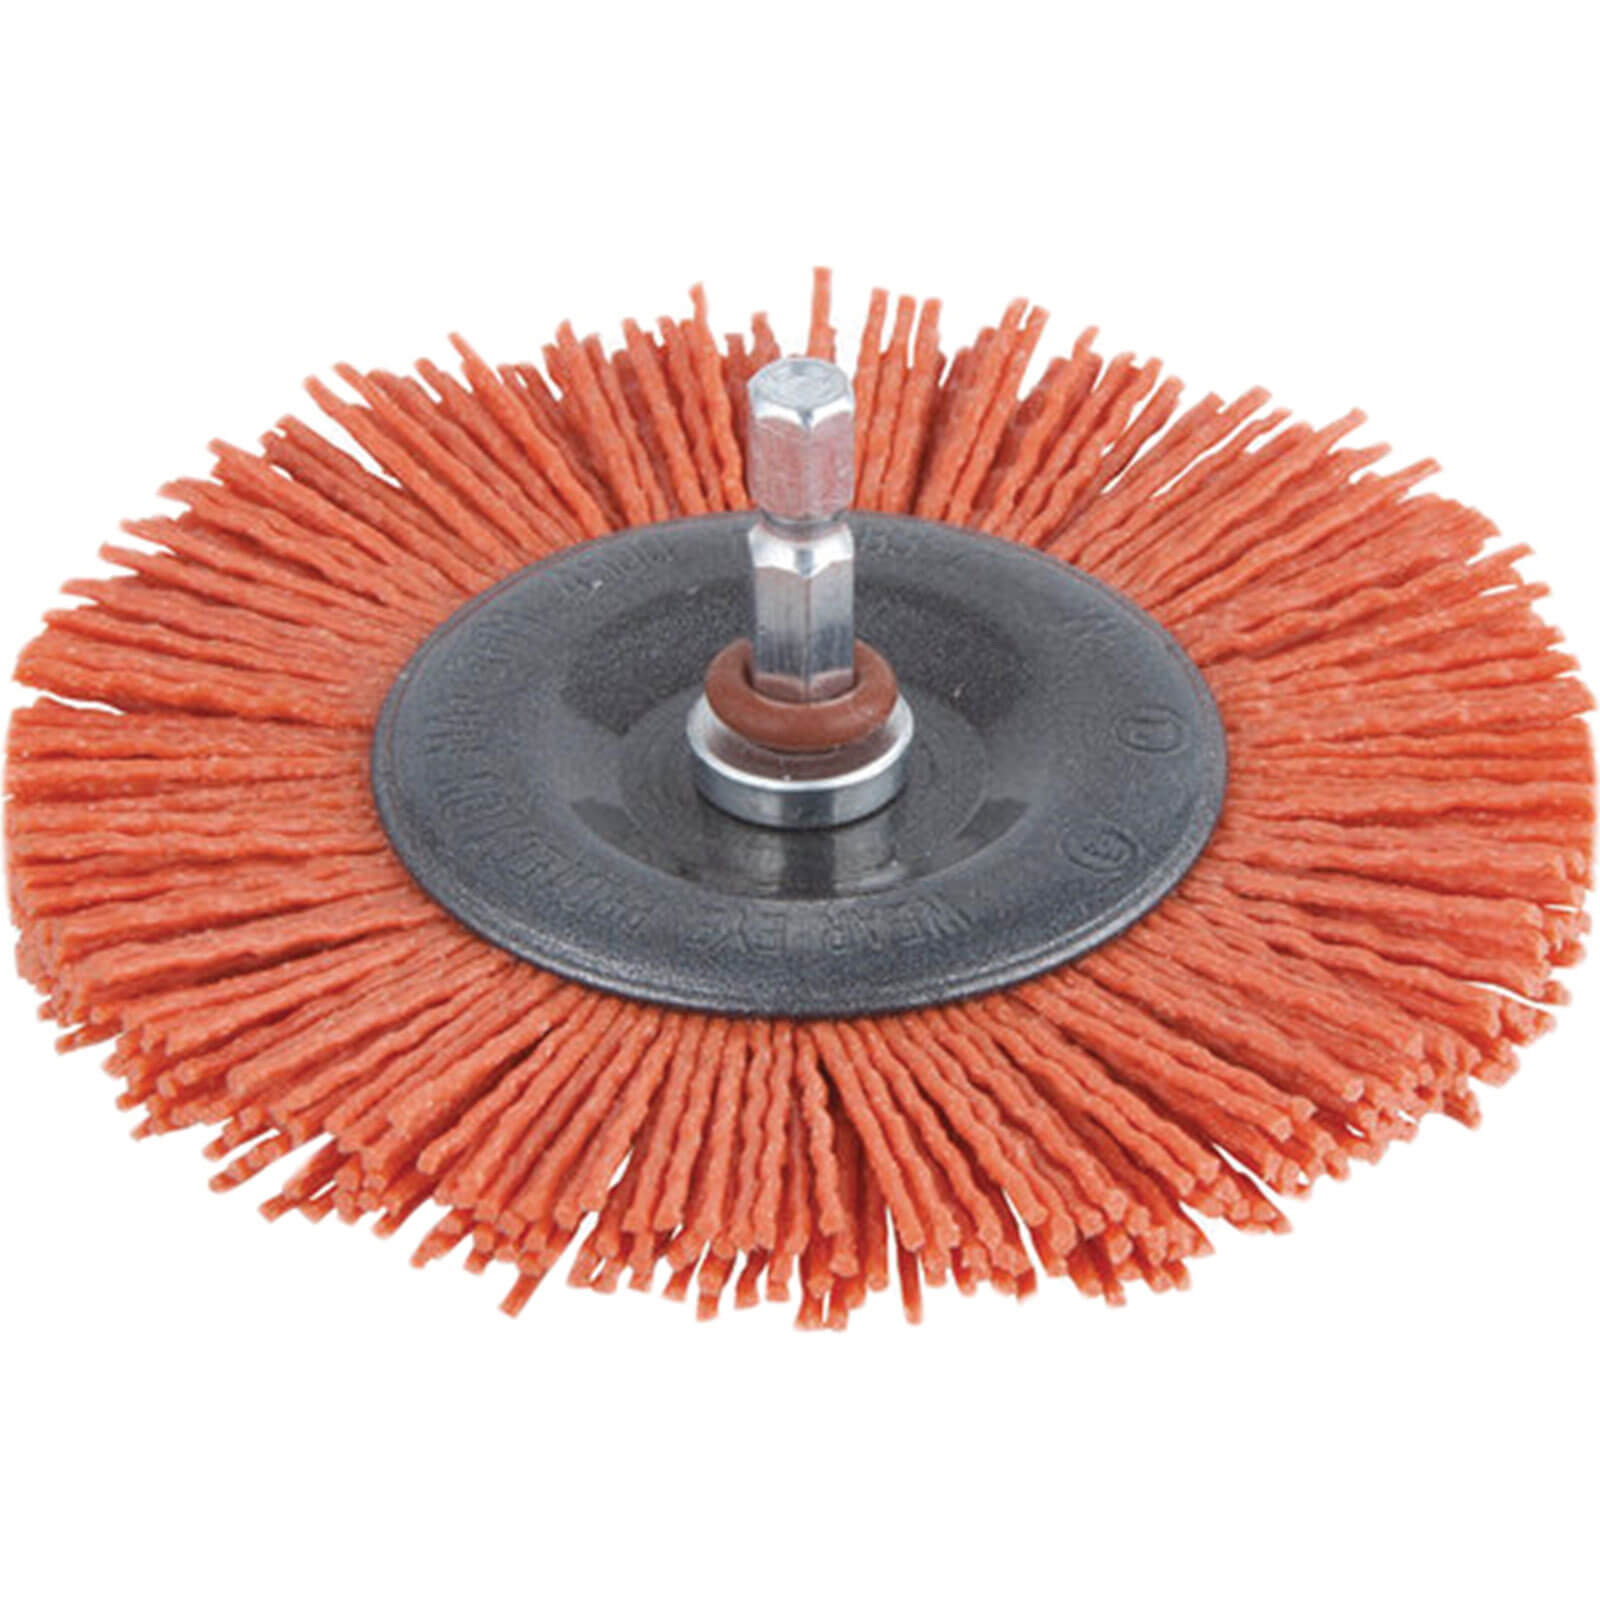 Image of Wolfcraft Abrasive Nylon Bristle Wheel Brush 100mm 6mm Shank